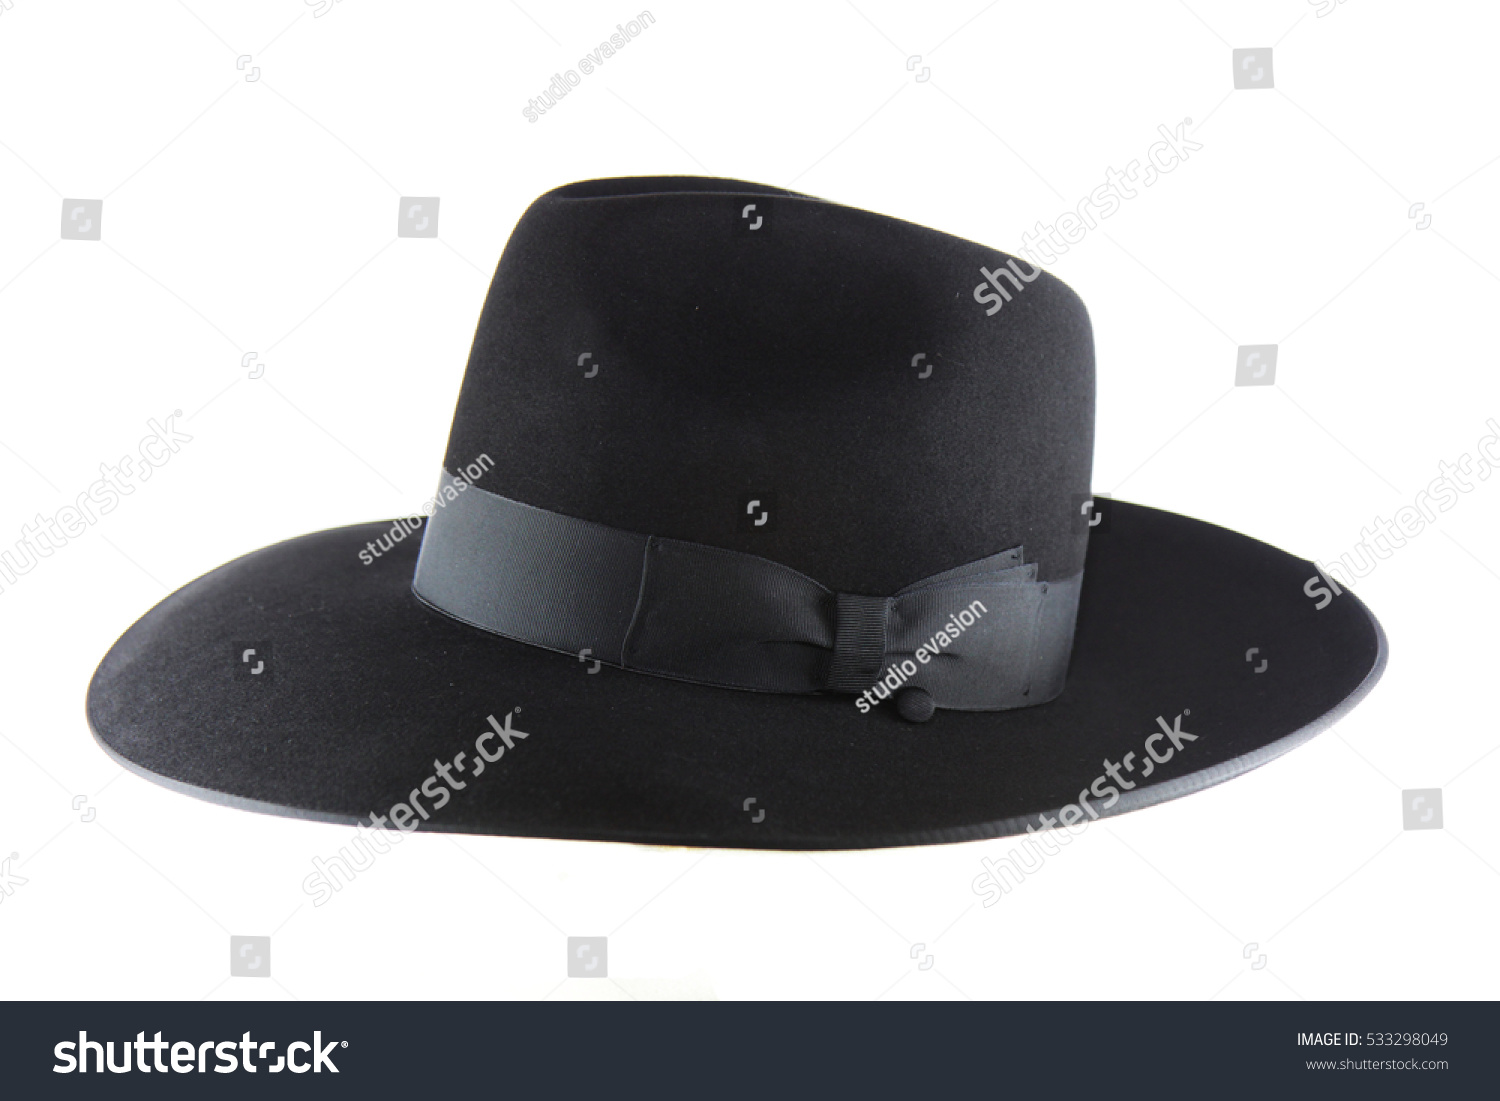 Jewish litvak hat isolated on white background #533298049